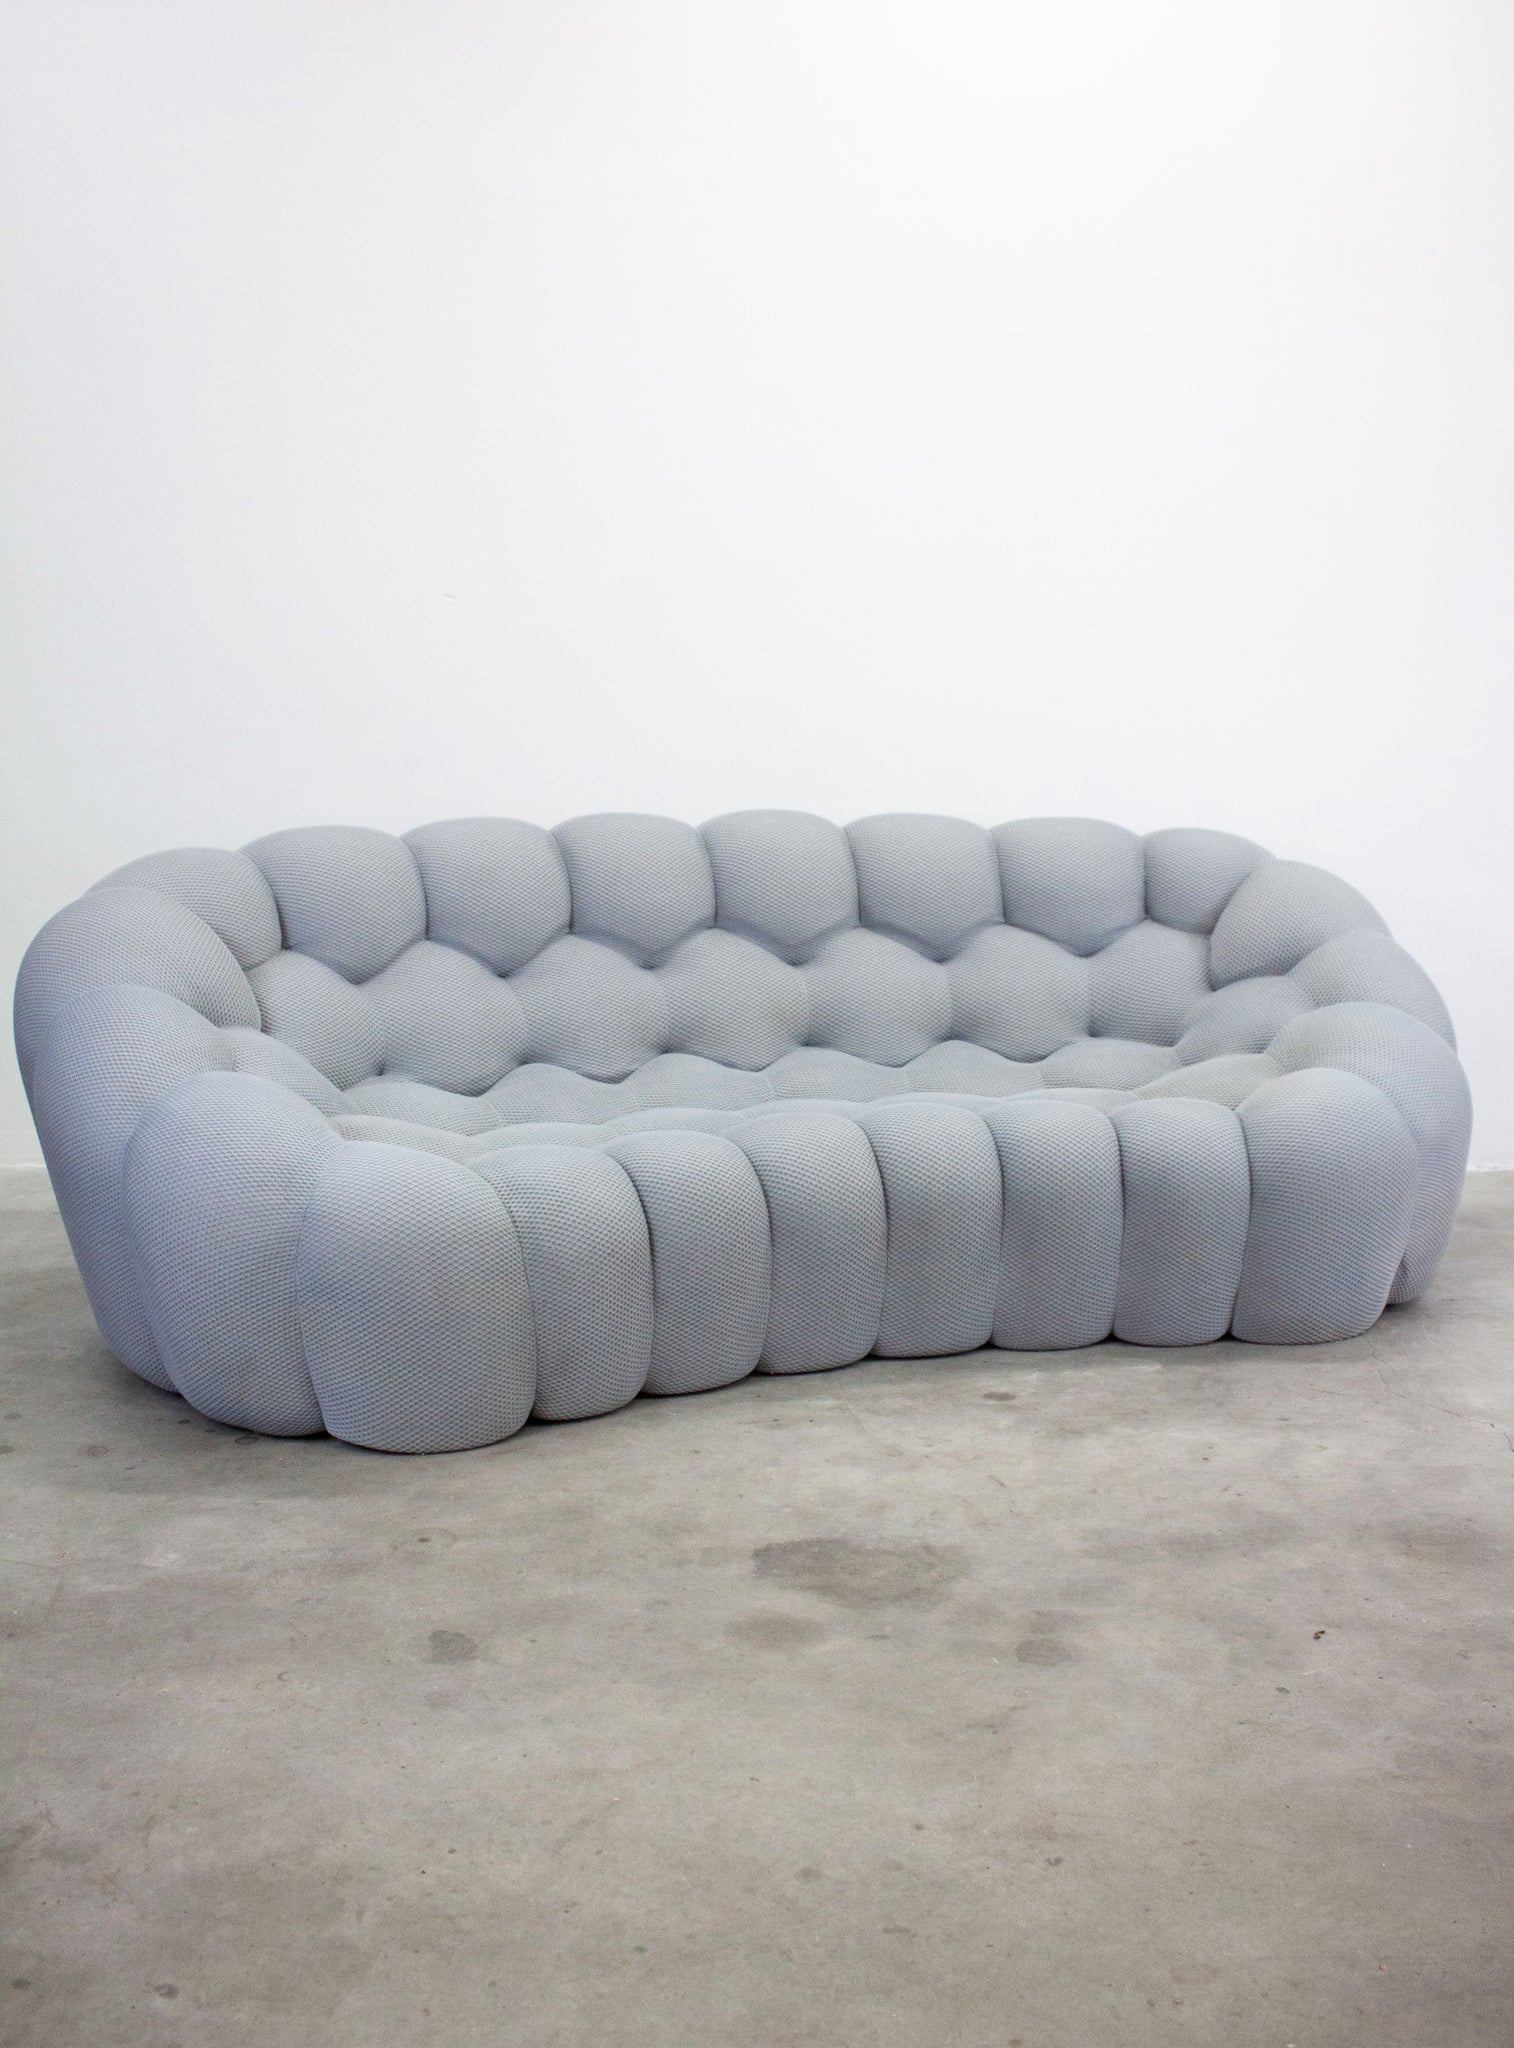 Roche Bobois Bubble 2 Curved 3/4-Seat Sofa by Sacha Lakic (Light Grey)